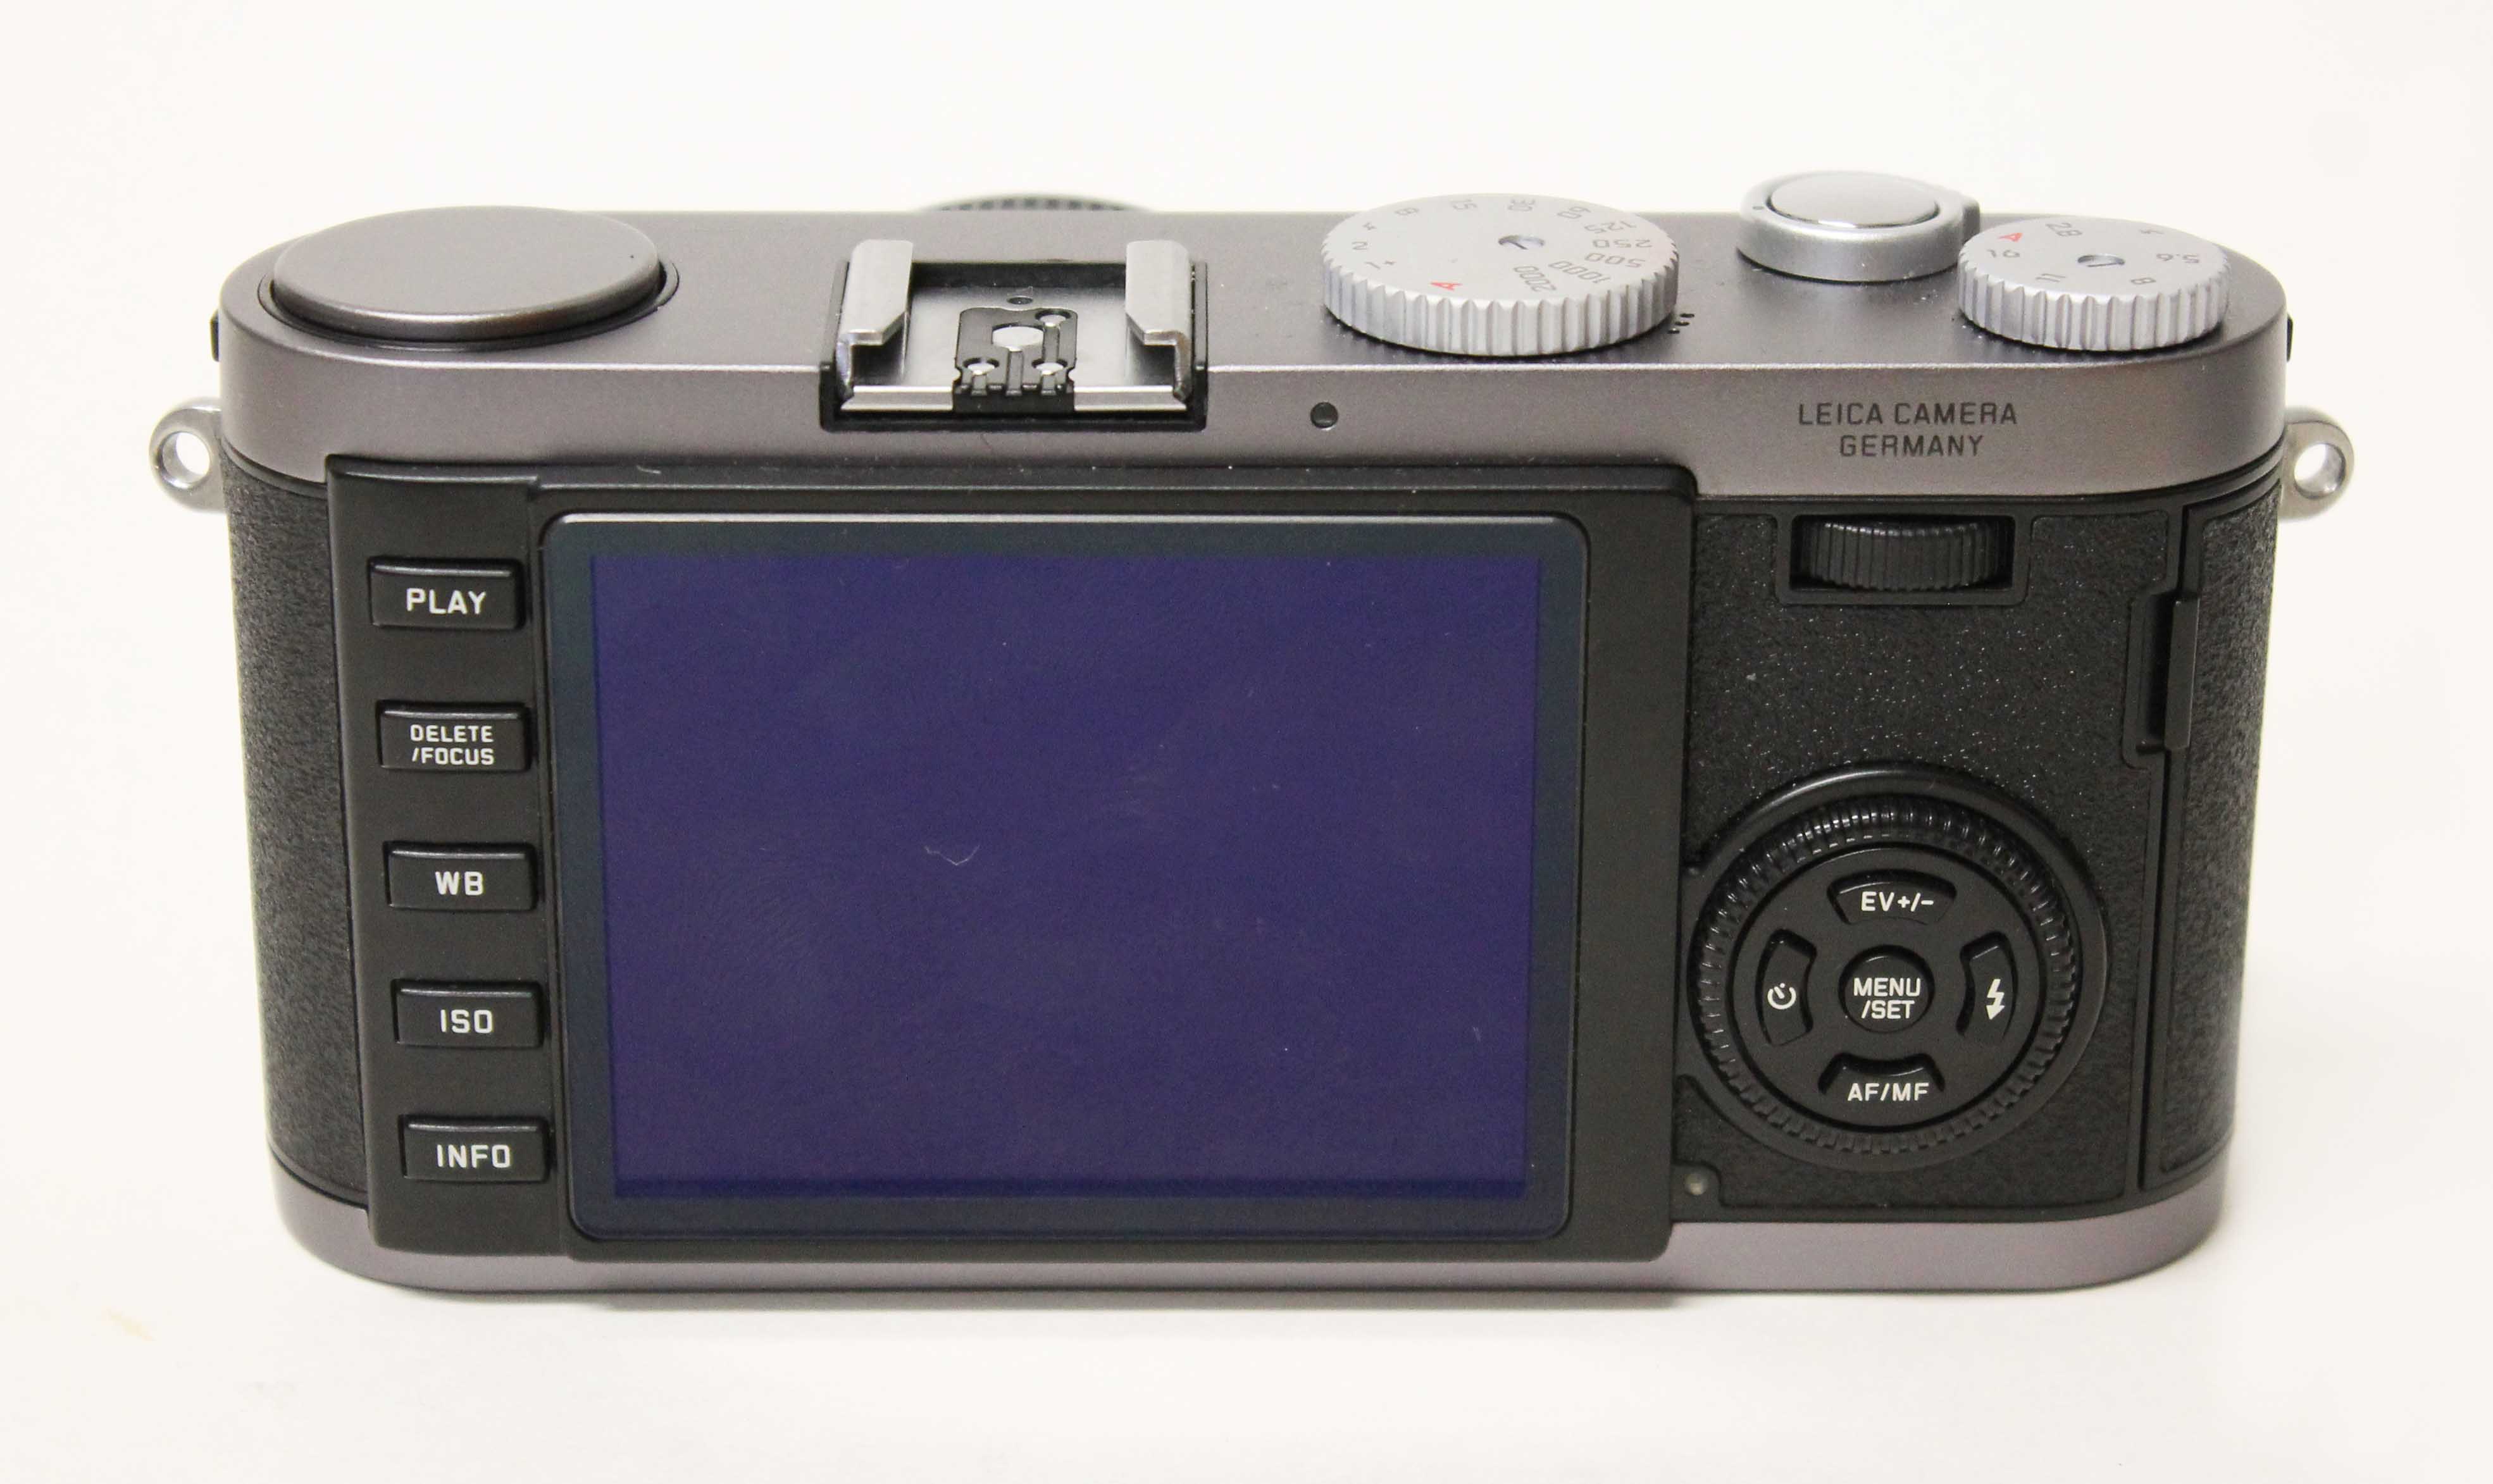 A Leica X1 digital camera, steel grey, with Elmarit 1:2.8/24 ASPH lens, serial no. 3815631, - Image 3 of 3